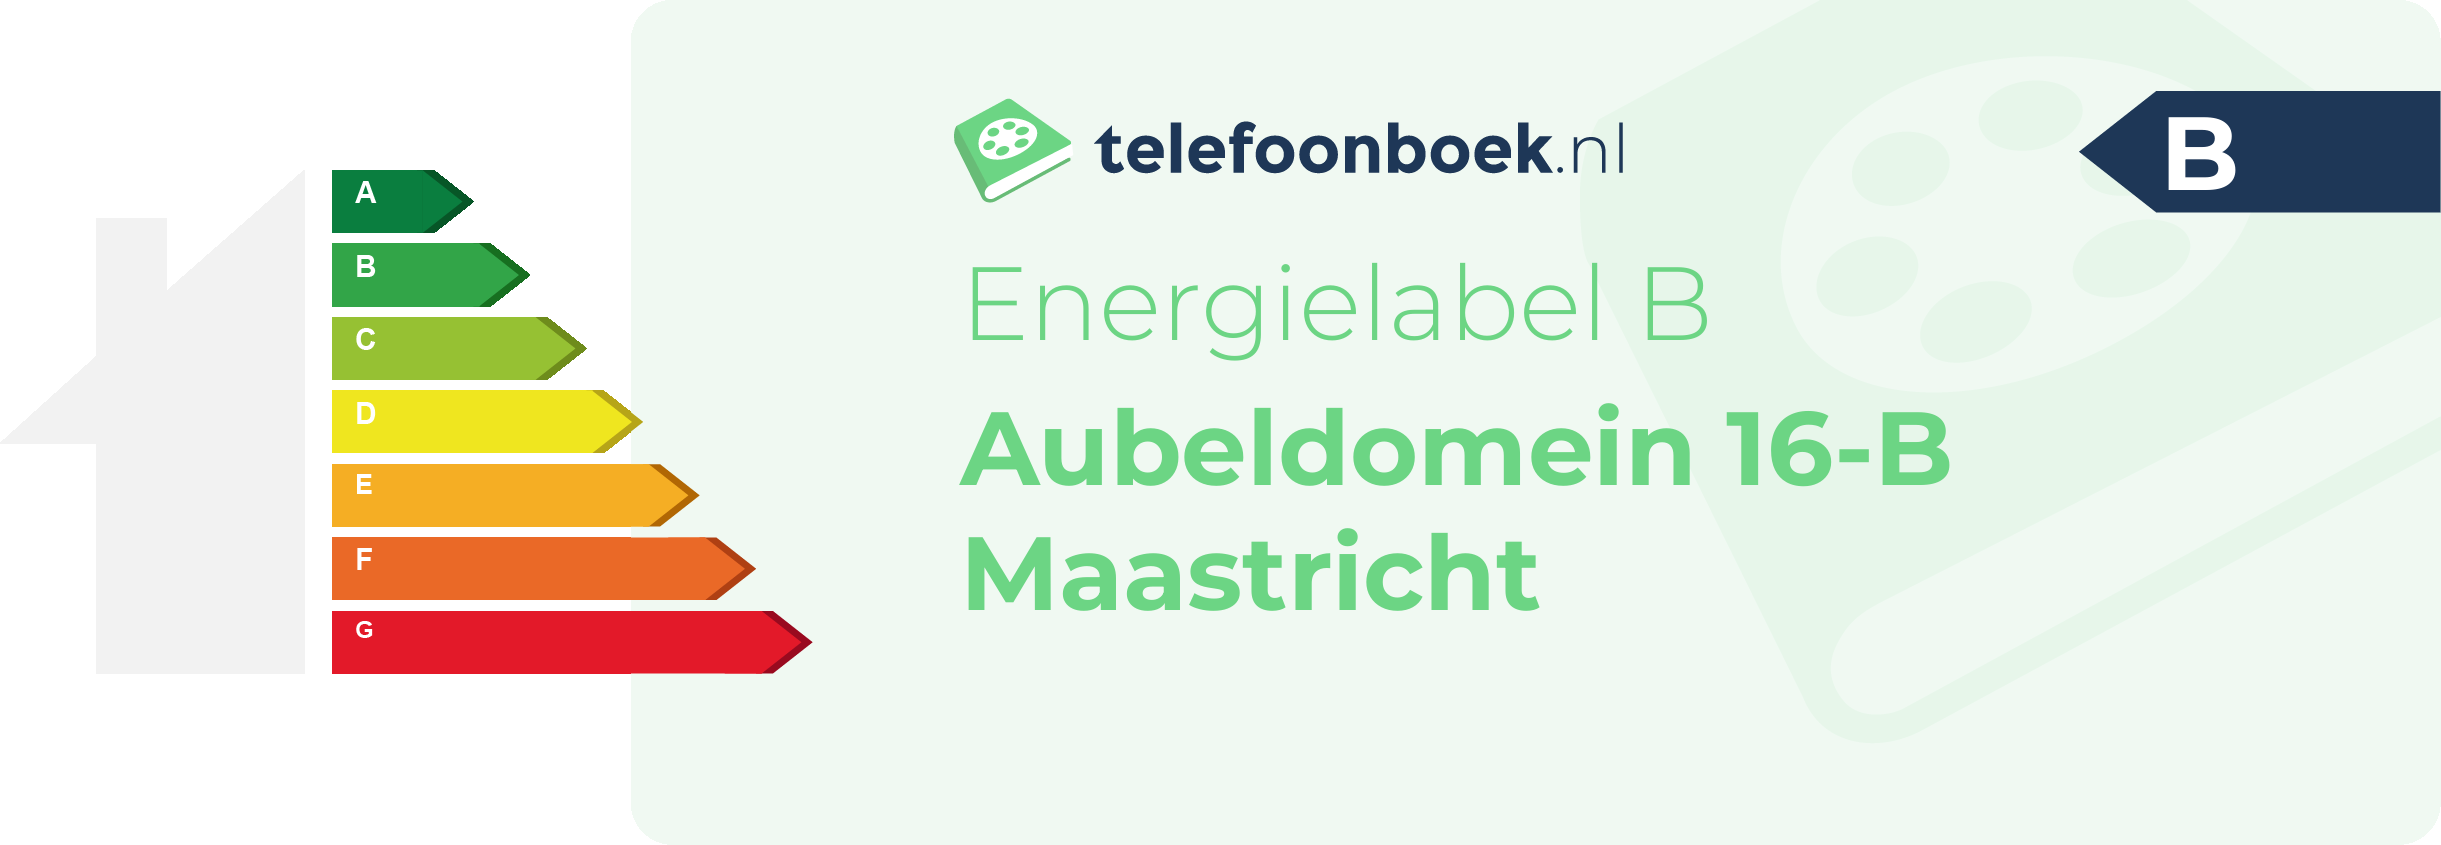 Energielabel Aubeldomein 16-B Maastricht